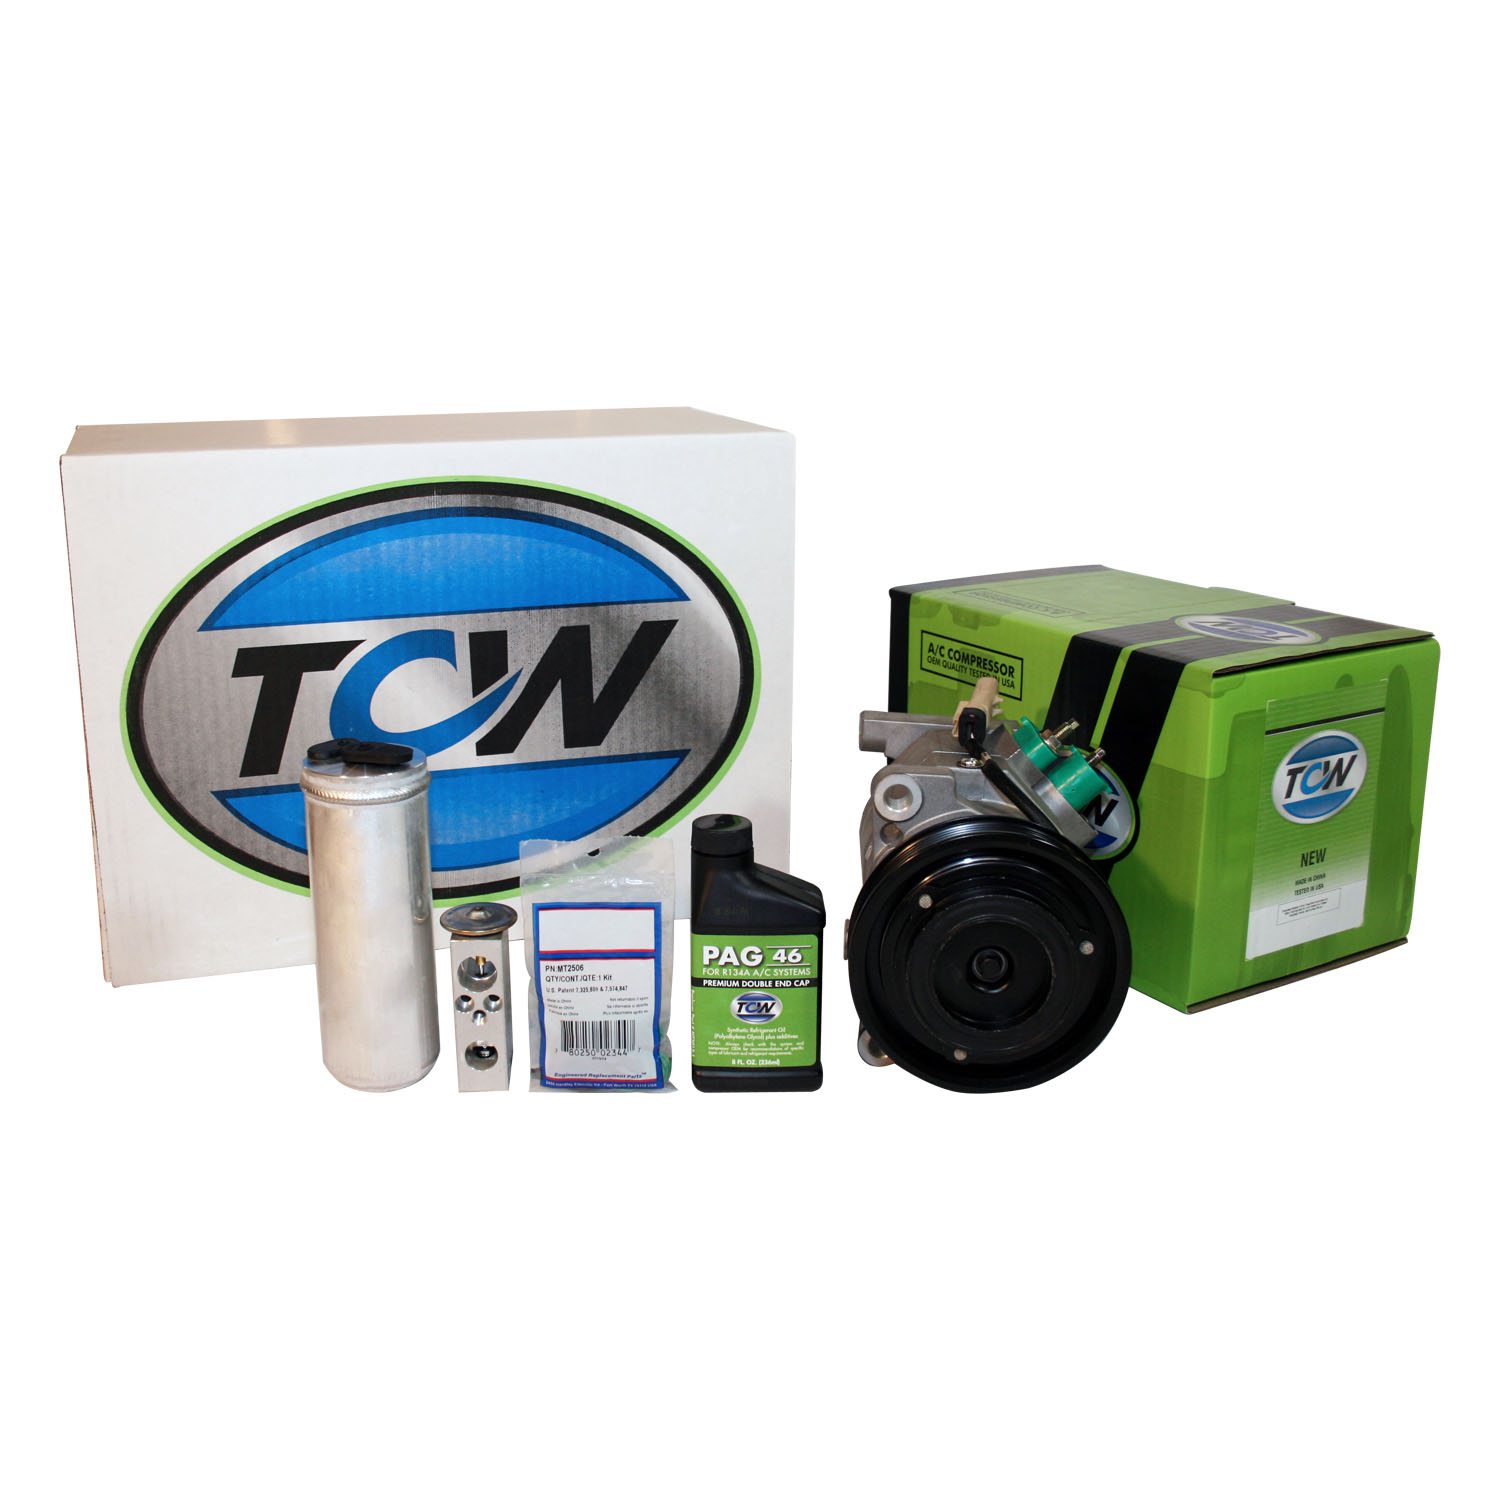 TCW Vehicle A/C Kit K1000209N New Product Image field_60b6a13a6e67c